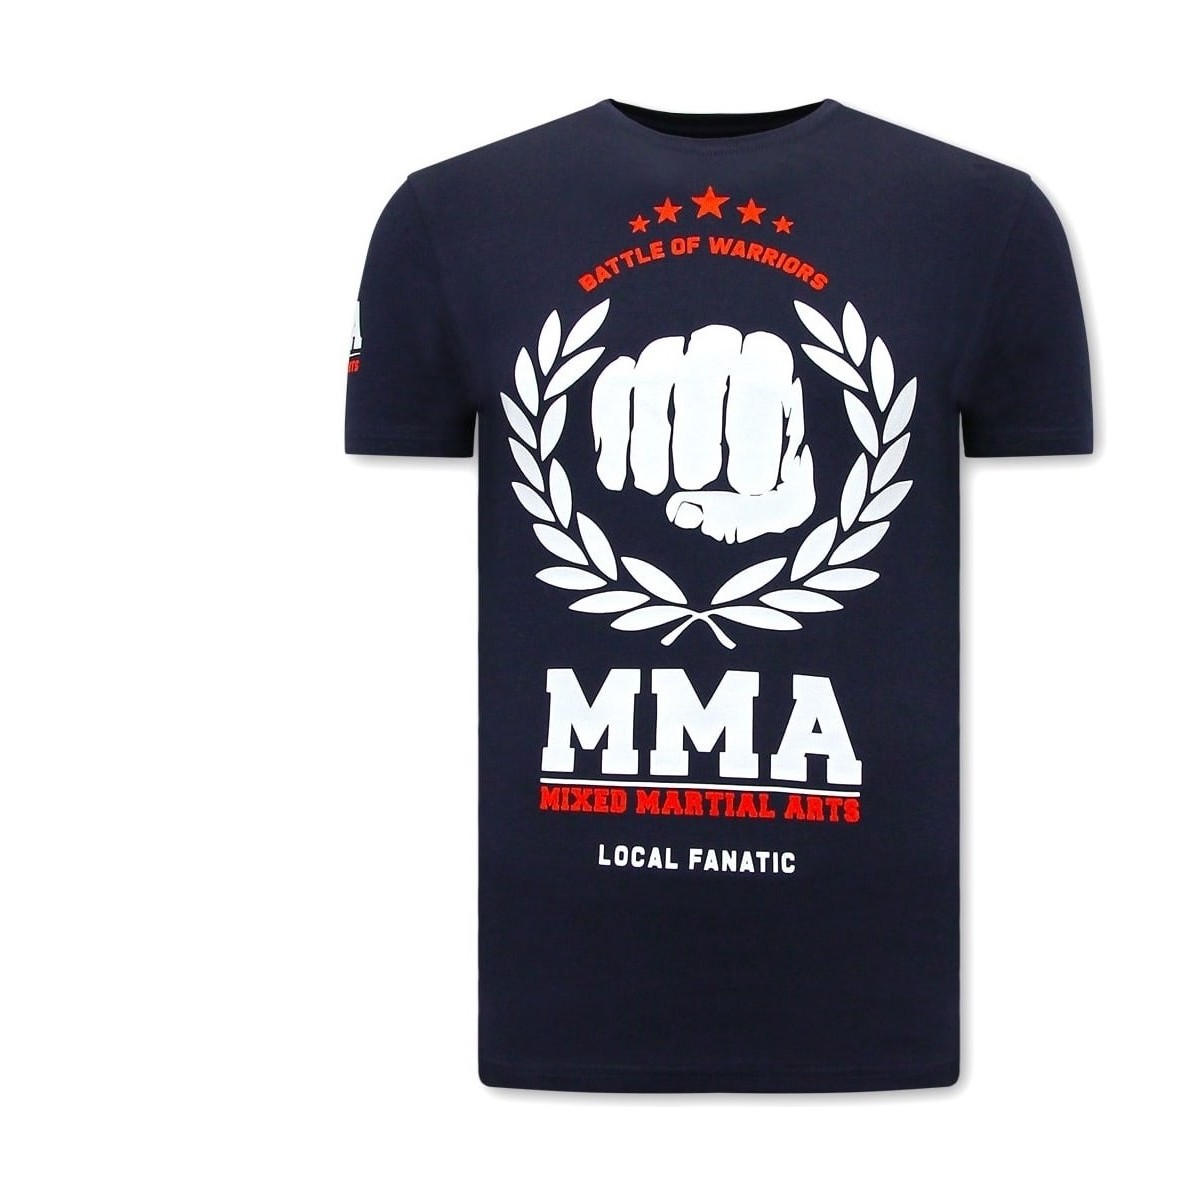 Textiel Heren T-shirts korte mouwen Local Fanatic MMA Fighter Blauw